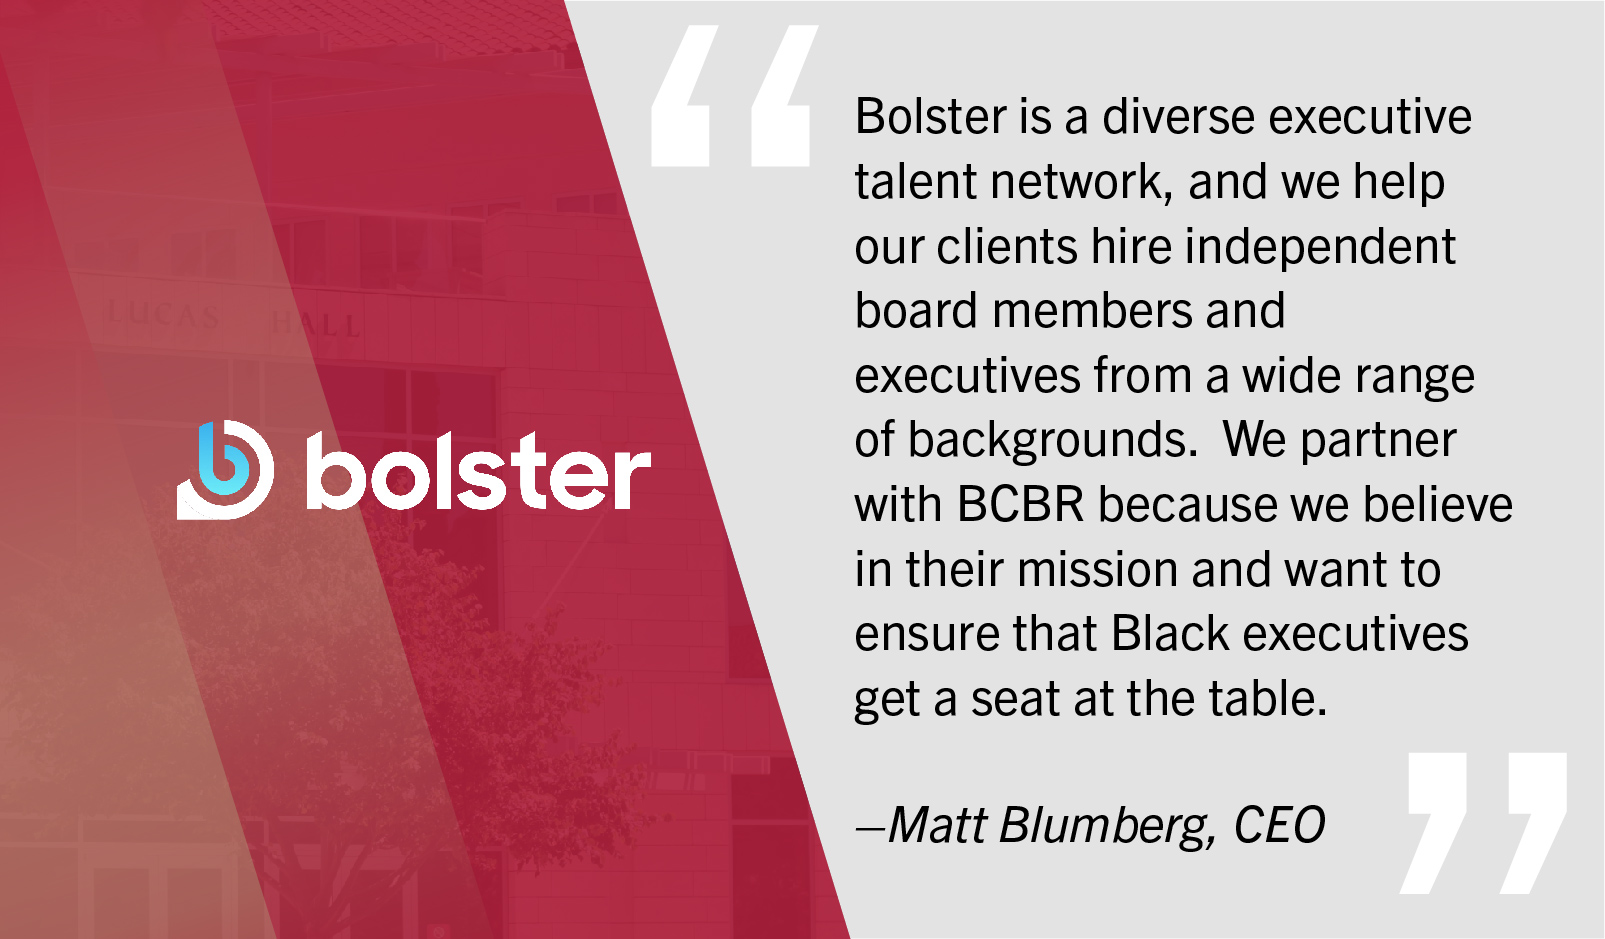 Testimonial from Matt Blumberg, CEO of Bolster